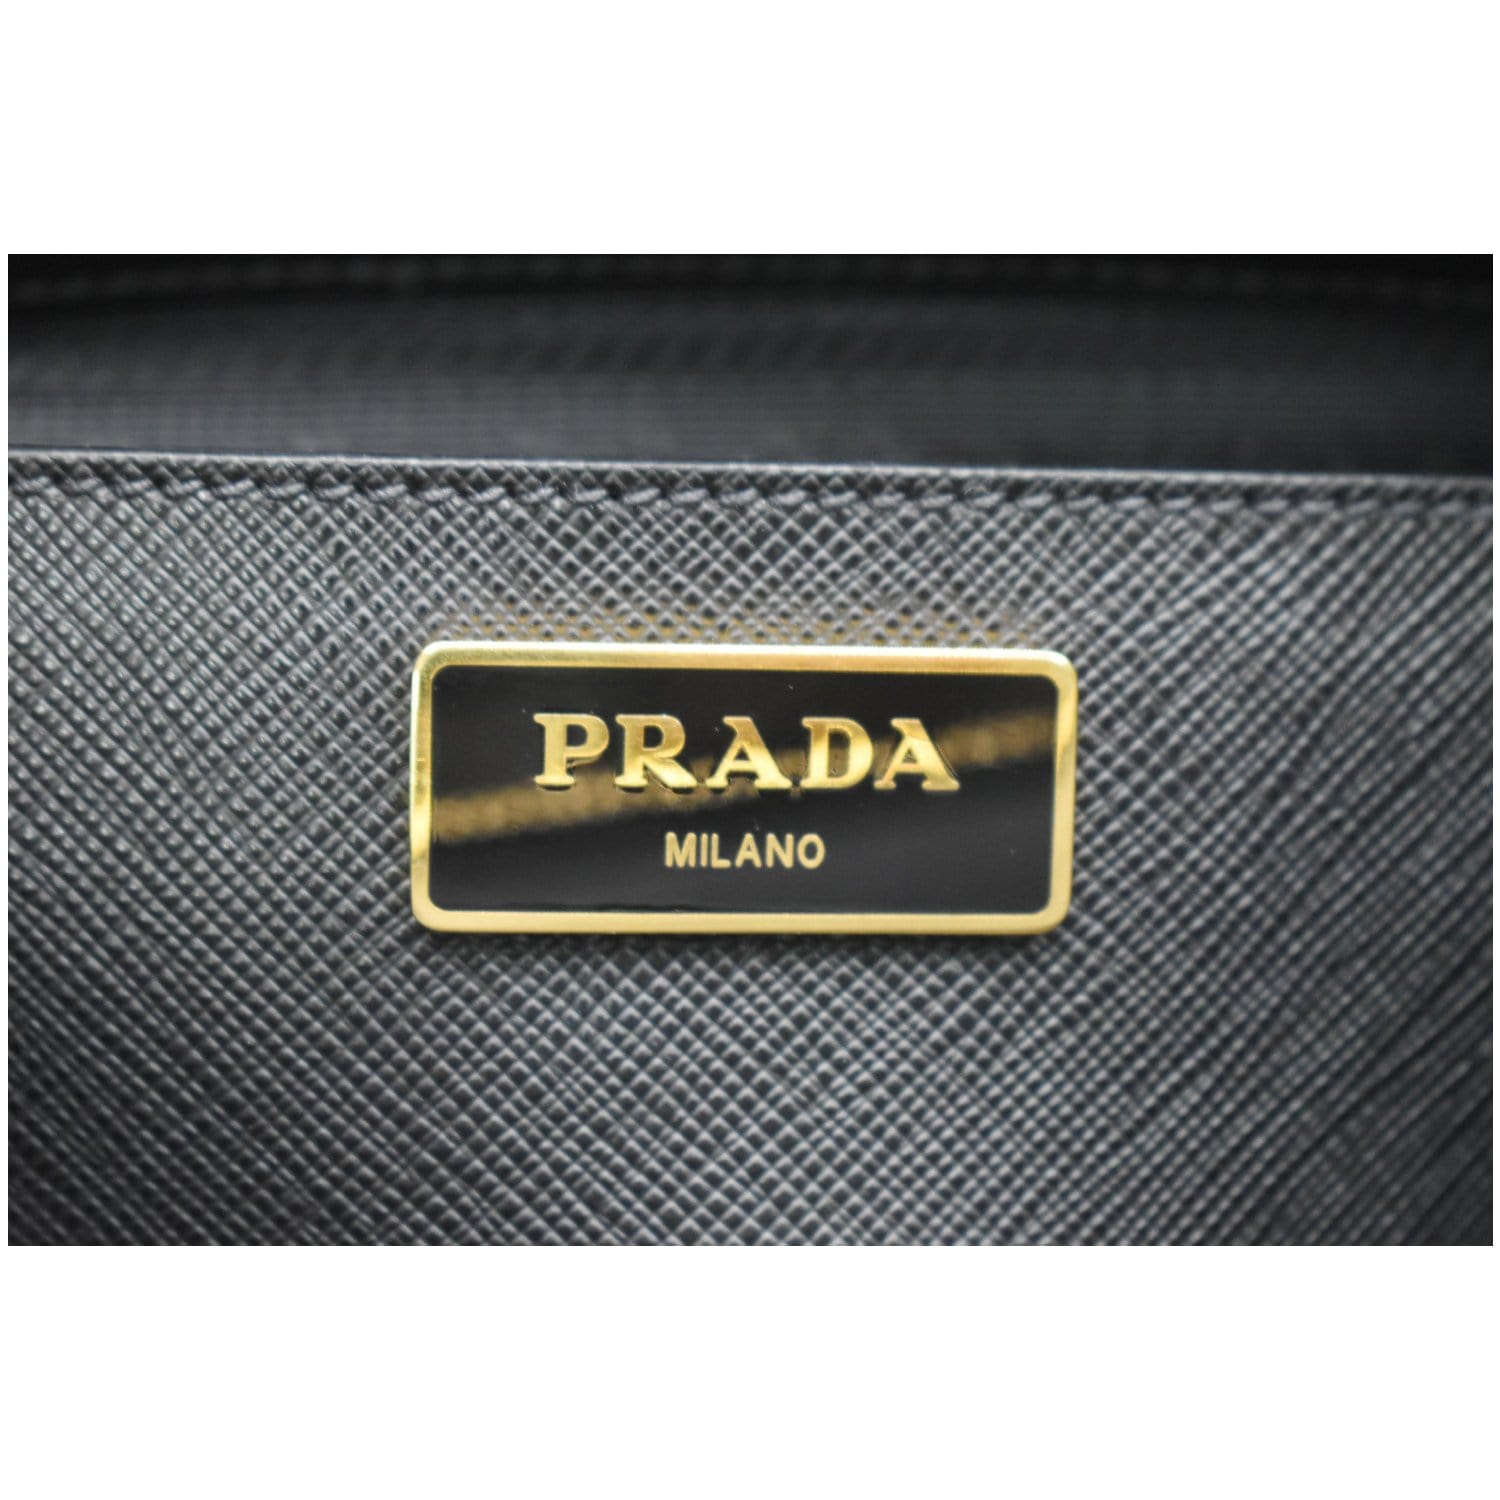 PRADA, SAFFIANO LEATHER GALLERIA TOTE BAG, Prada: Tools of Memory, 2020